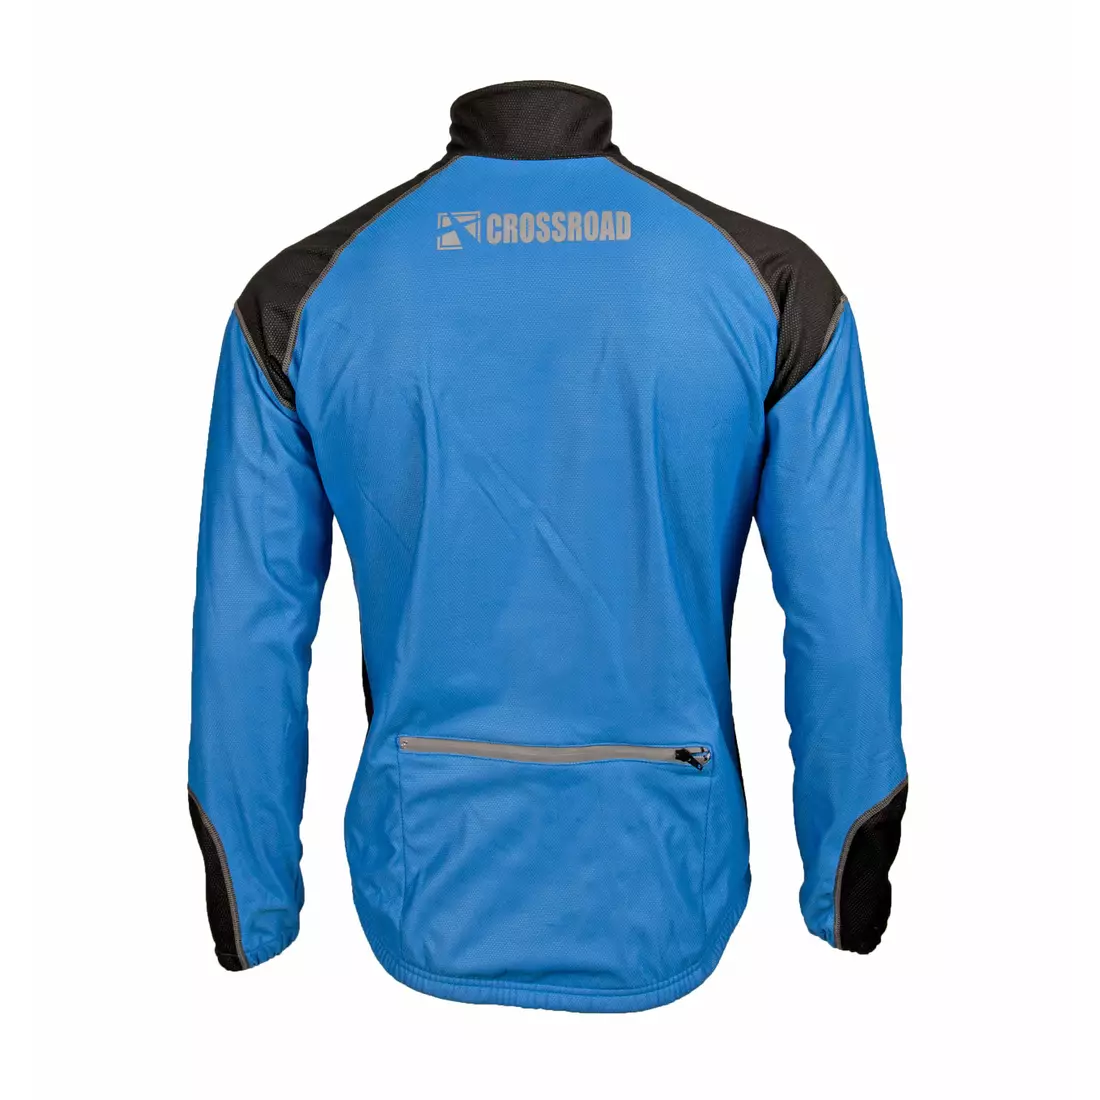 CROSSROAD FREEPORT zimná cyklistická bunda, modrá